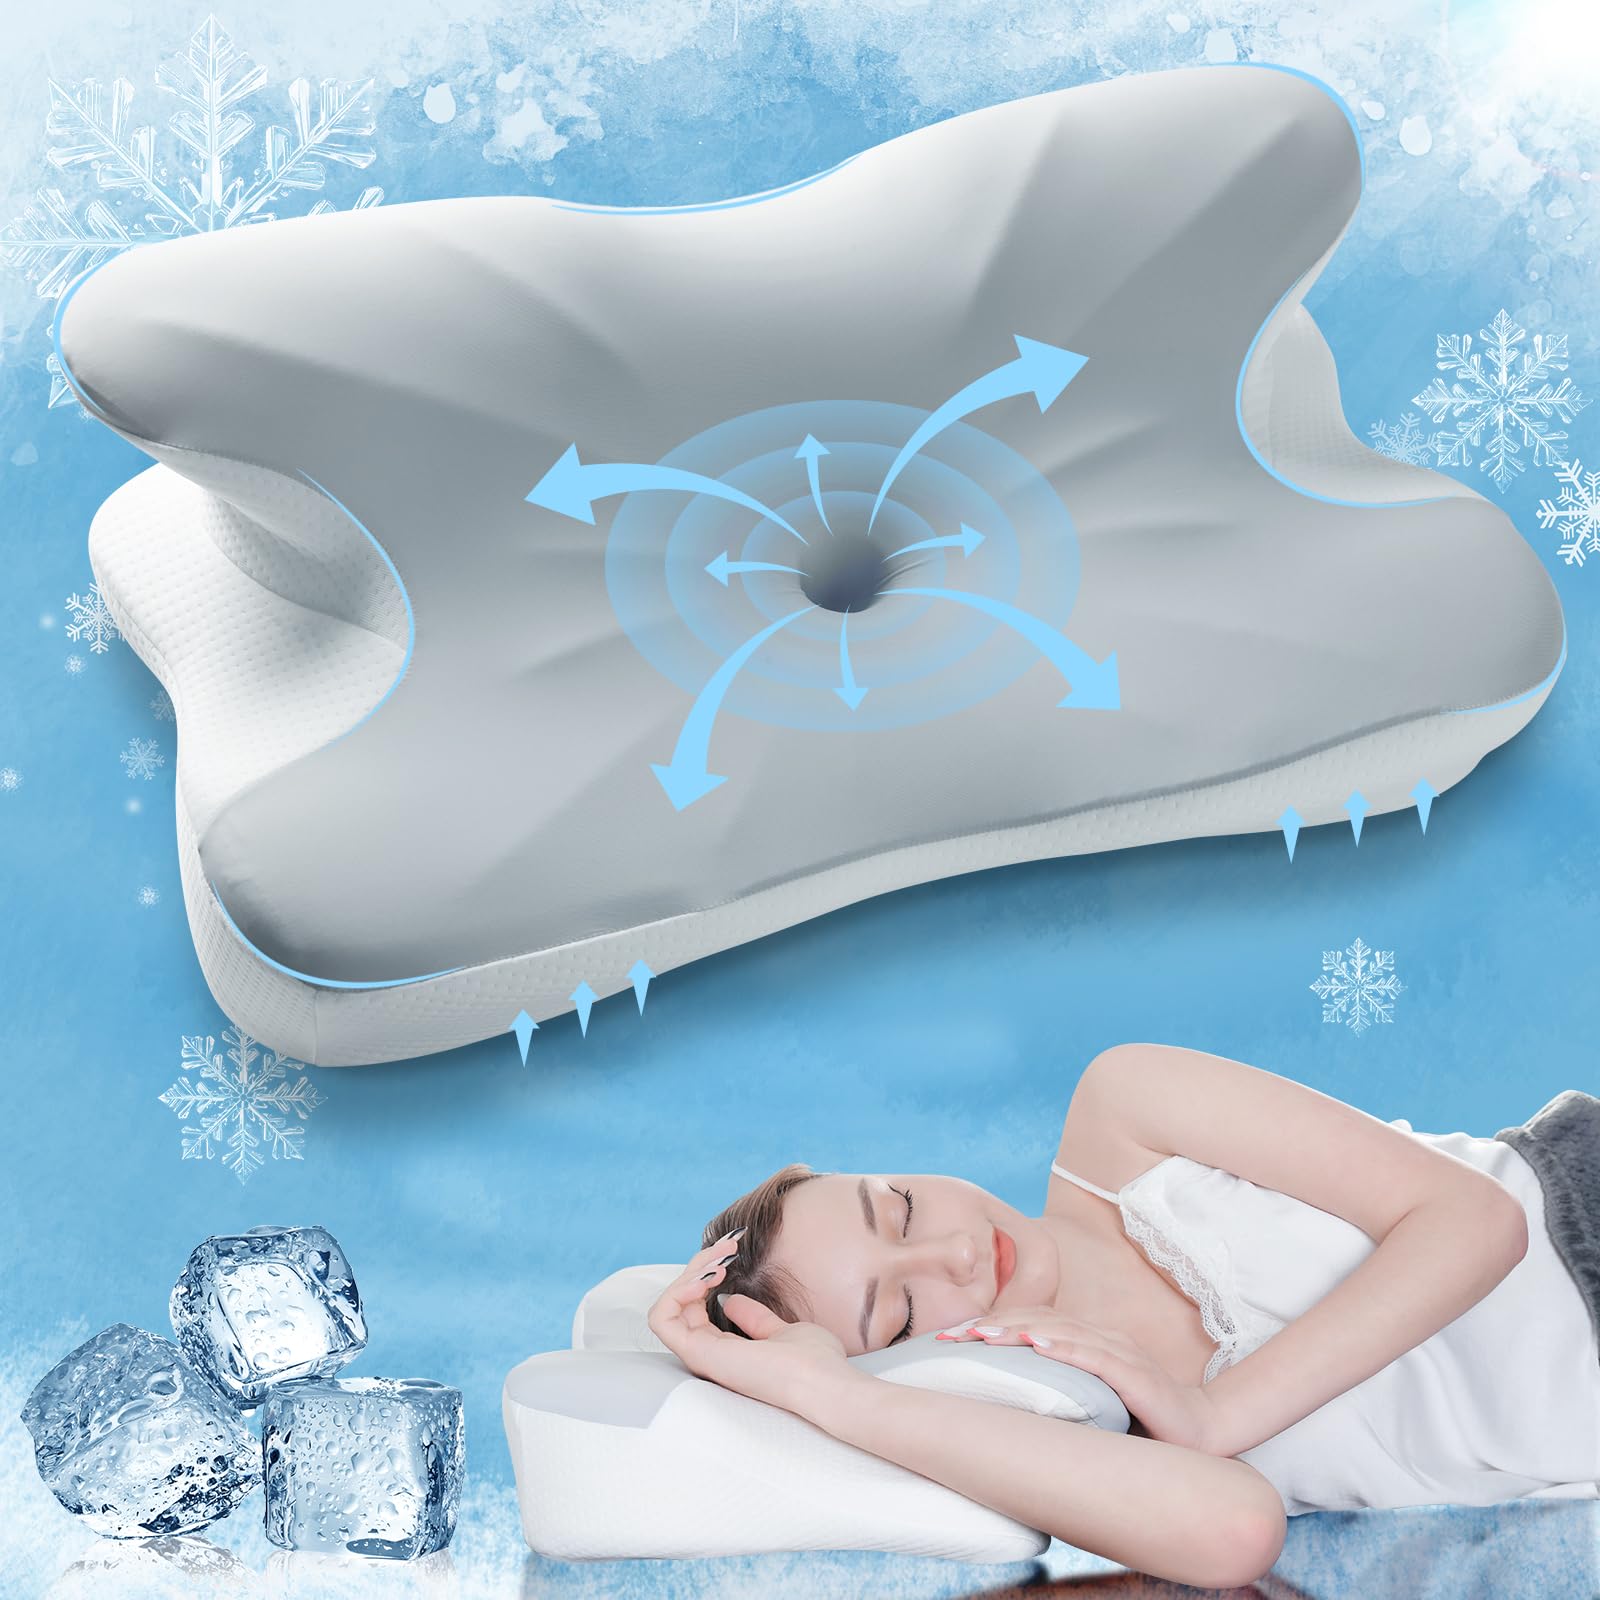 Butterfly Ergonomic Design Cervical Bed Pillow